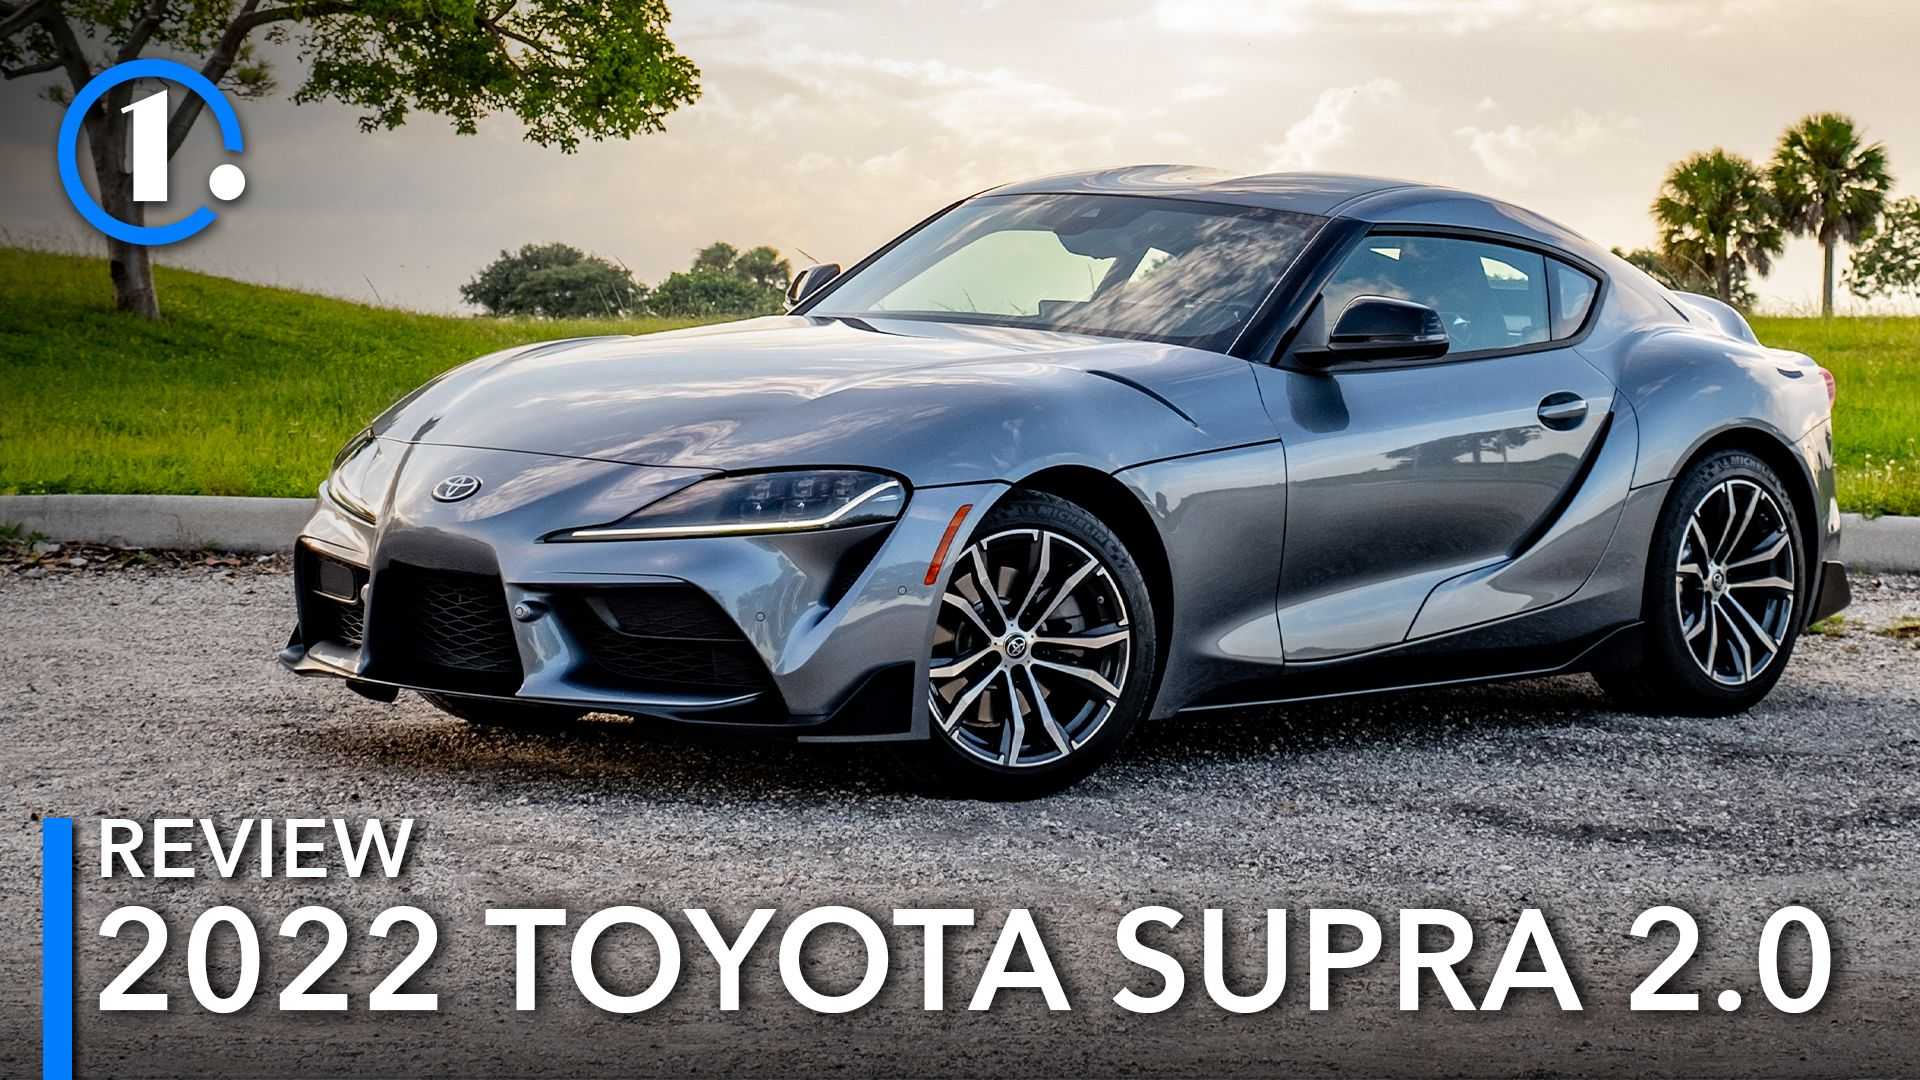 2022 Toyota Supra 2.0 Review: The Supra Simplified